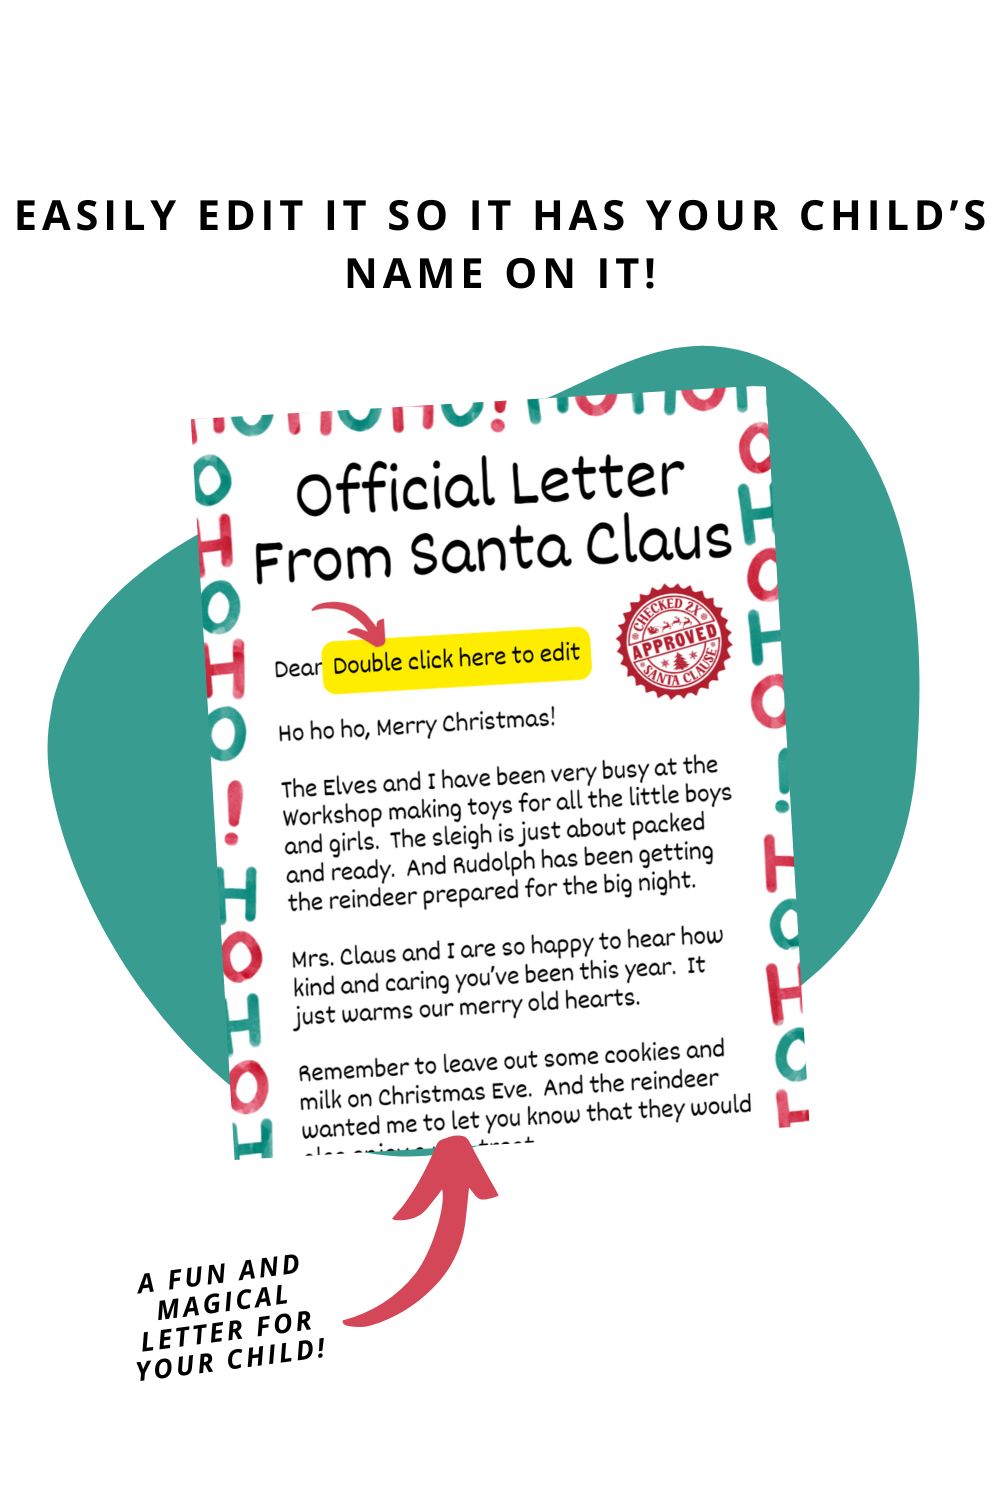 Editable Letter From Santa Printable